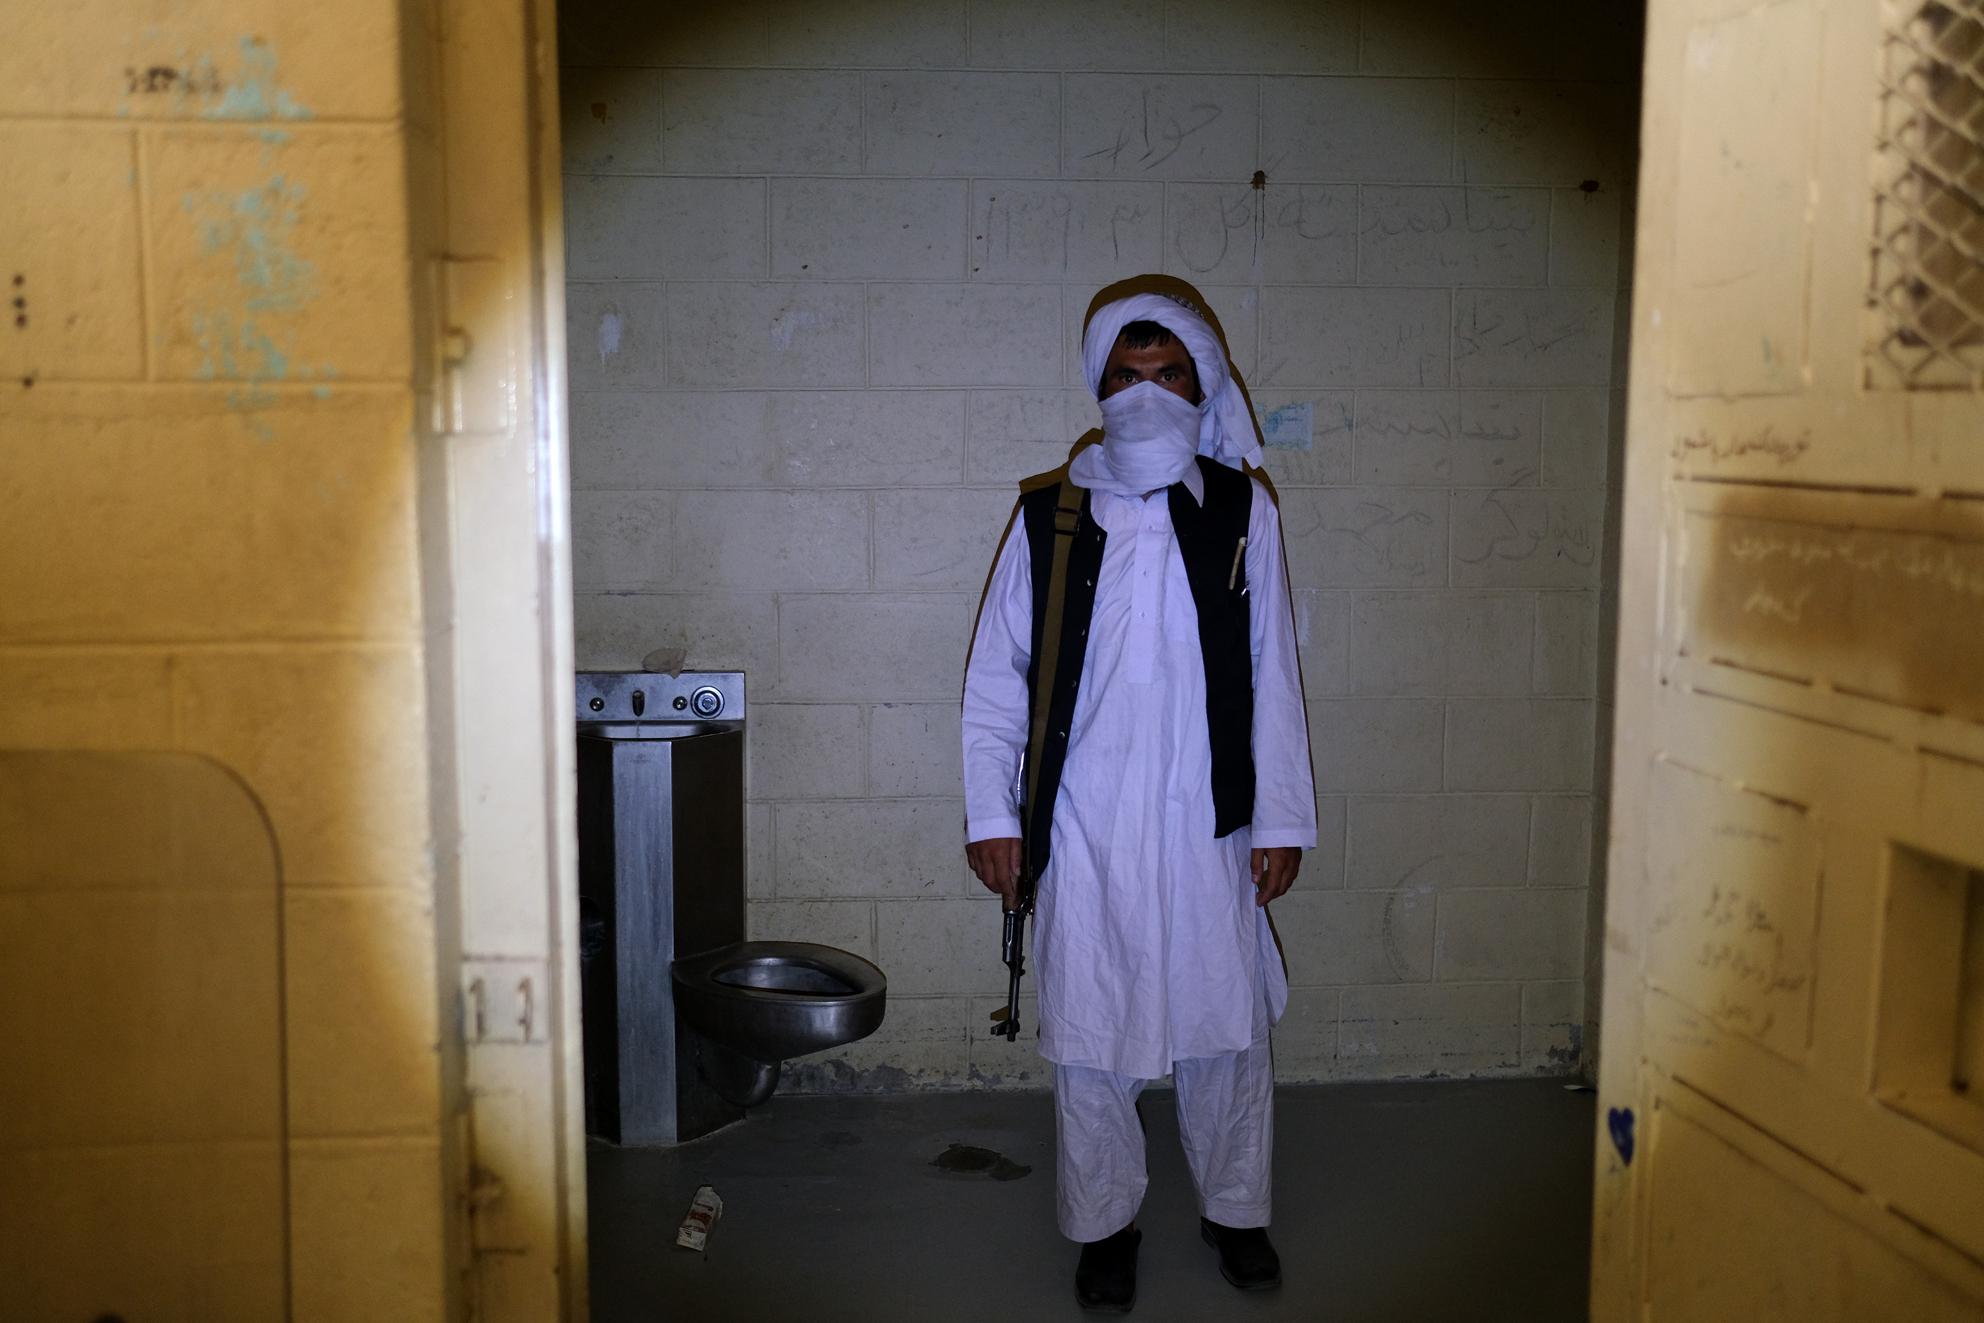 Bagram Prison, Afghanistan 